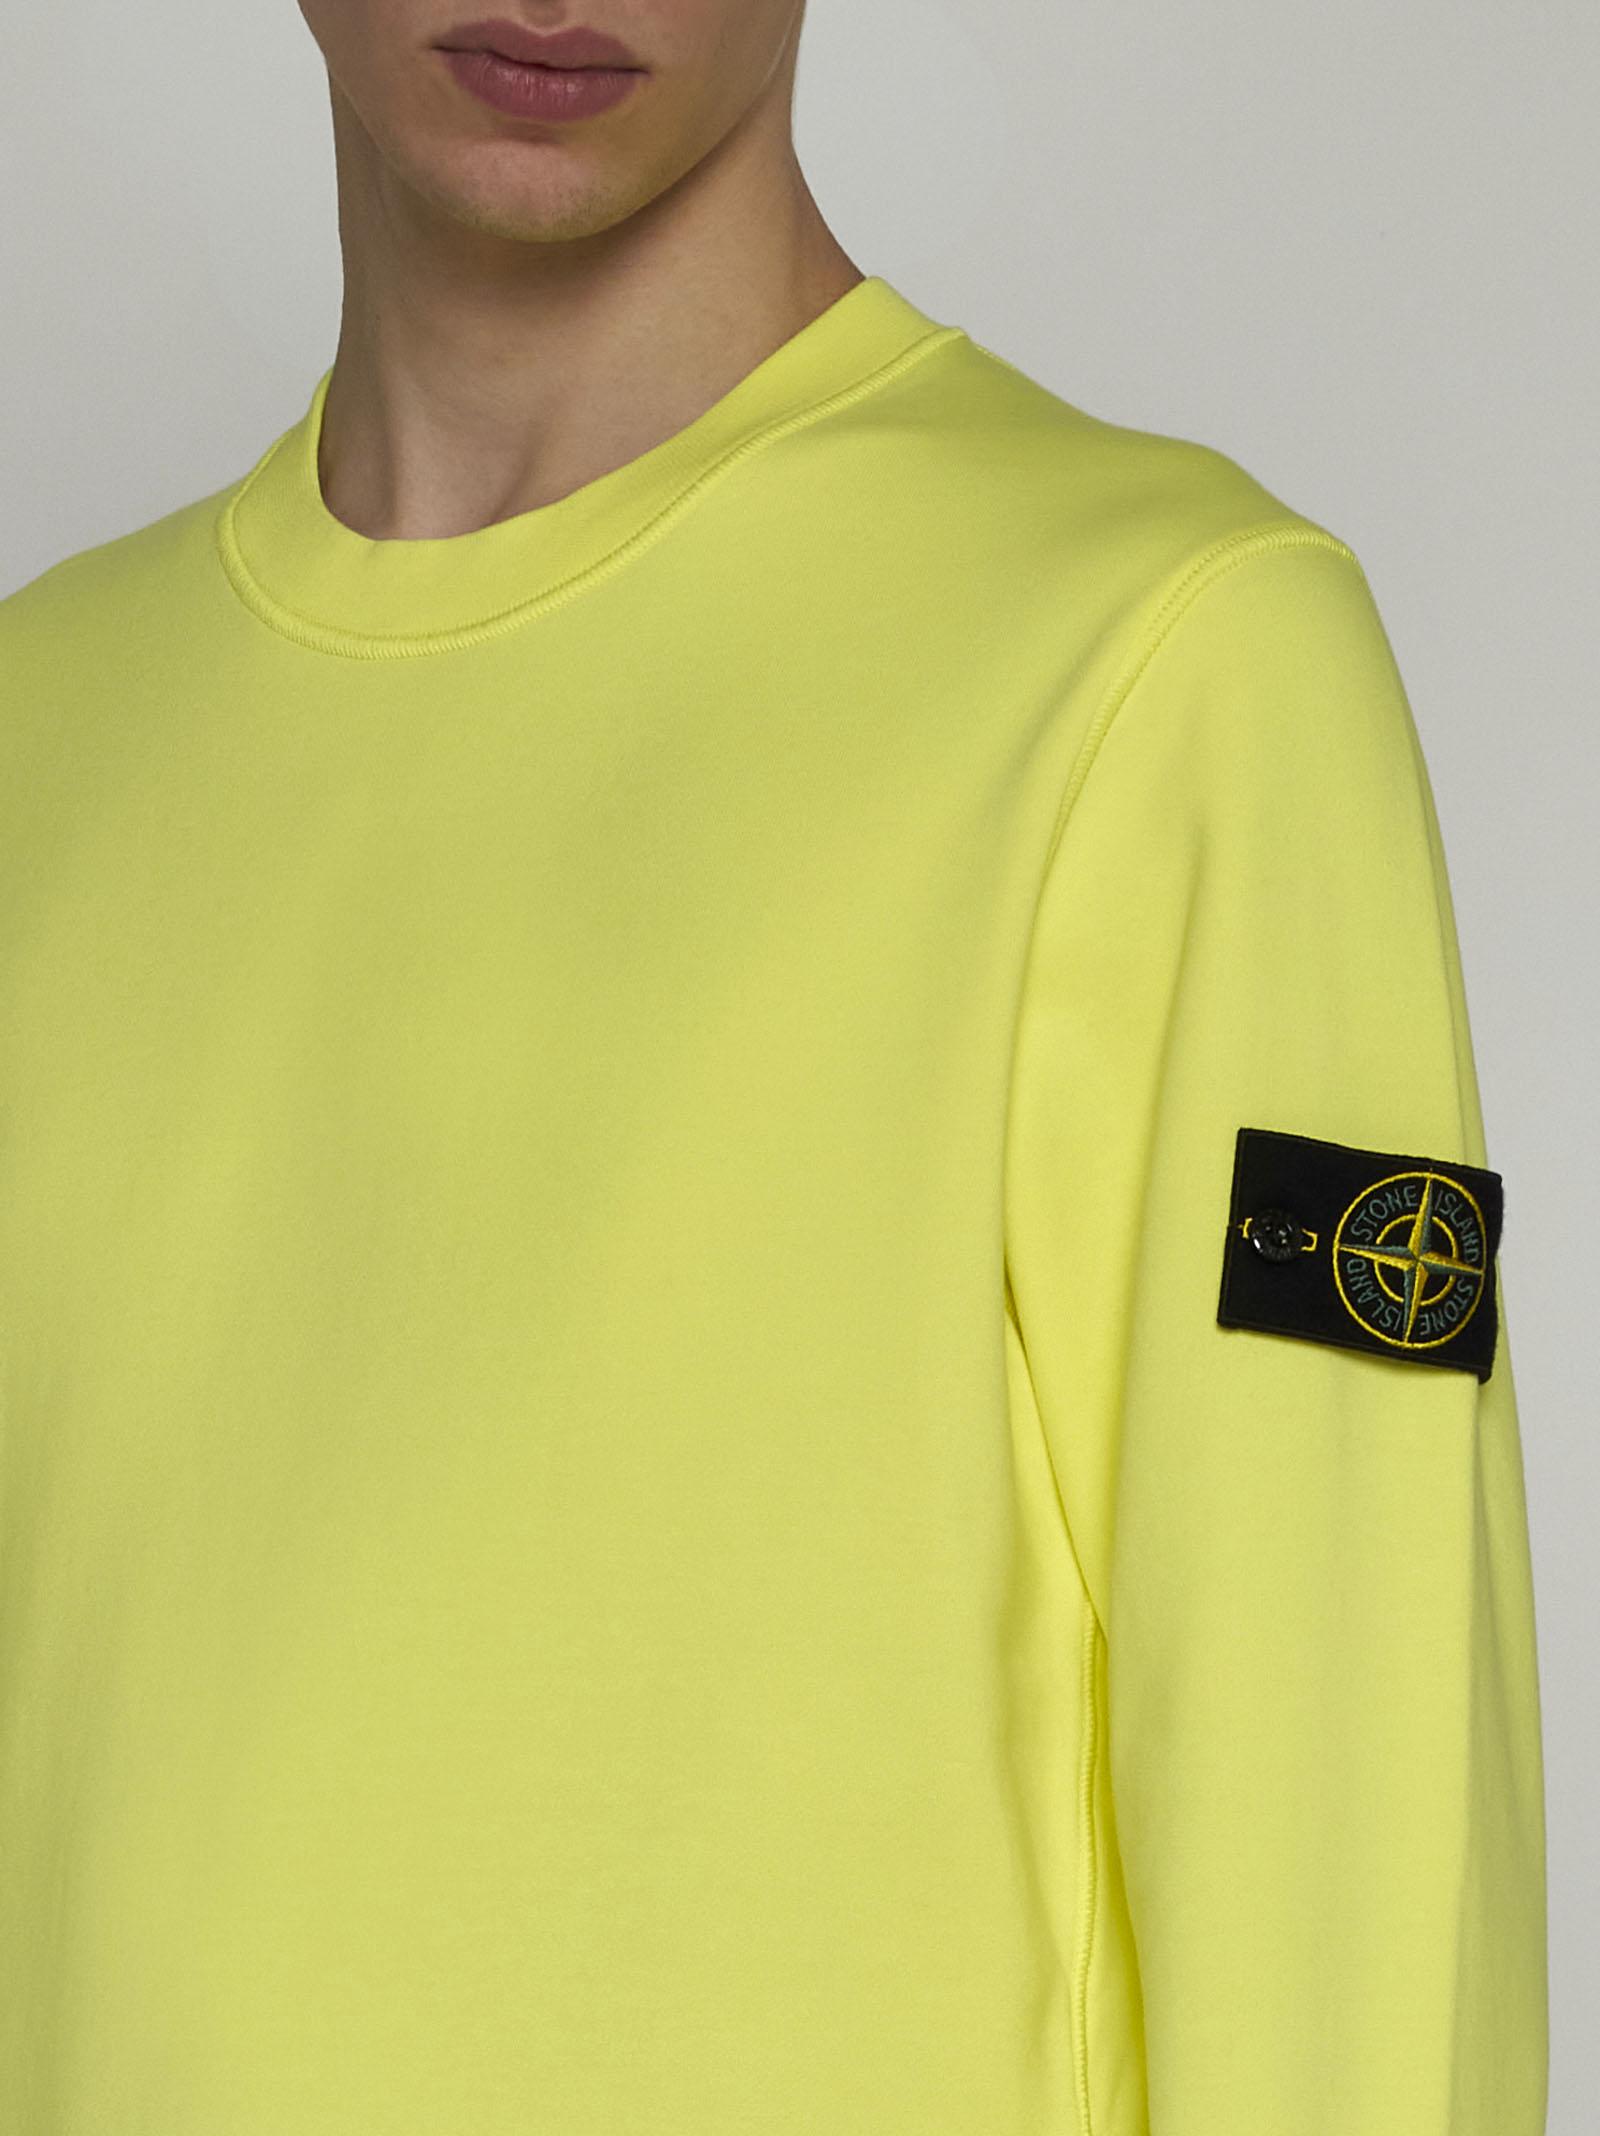 Stone Island Cotton Sweatshirt in Yellow for Men | Lyst